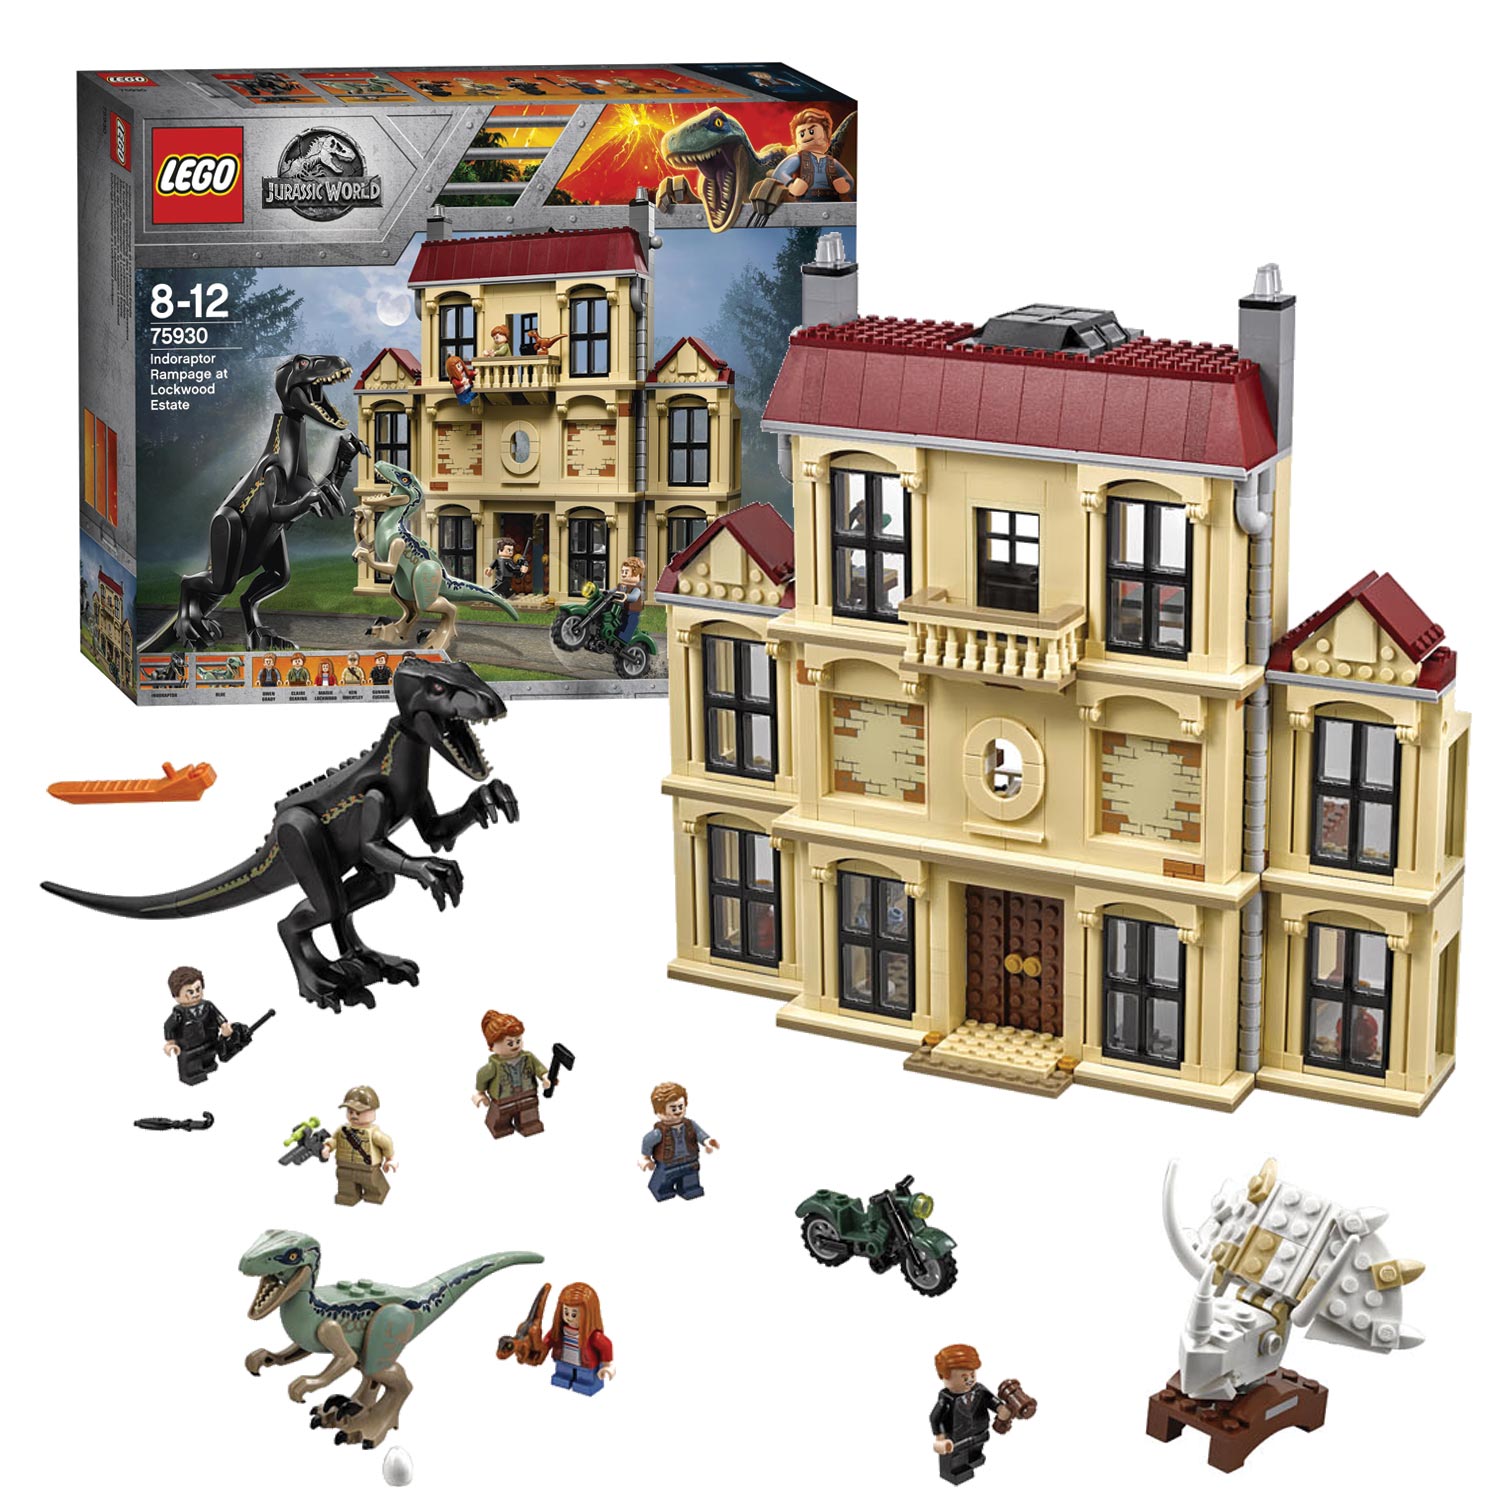 Zij zijn Aannames, aannames. Raad eens Oswald LEGO Jurassic World 75930 Indoraptorchaos at Lockwood Estat | Thimble Toys